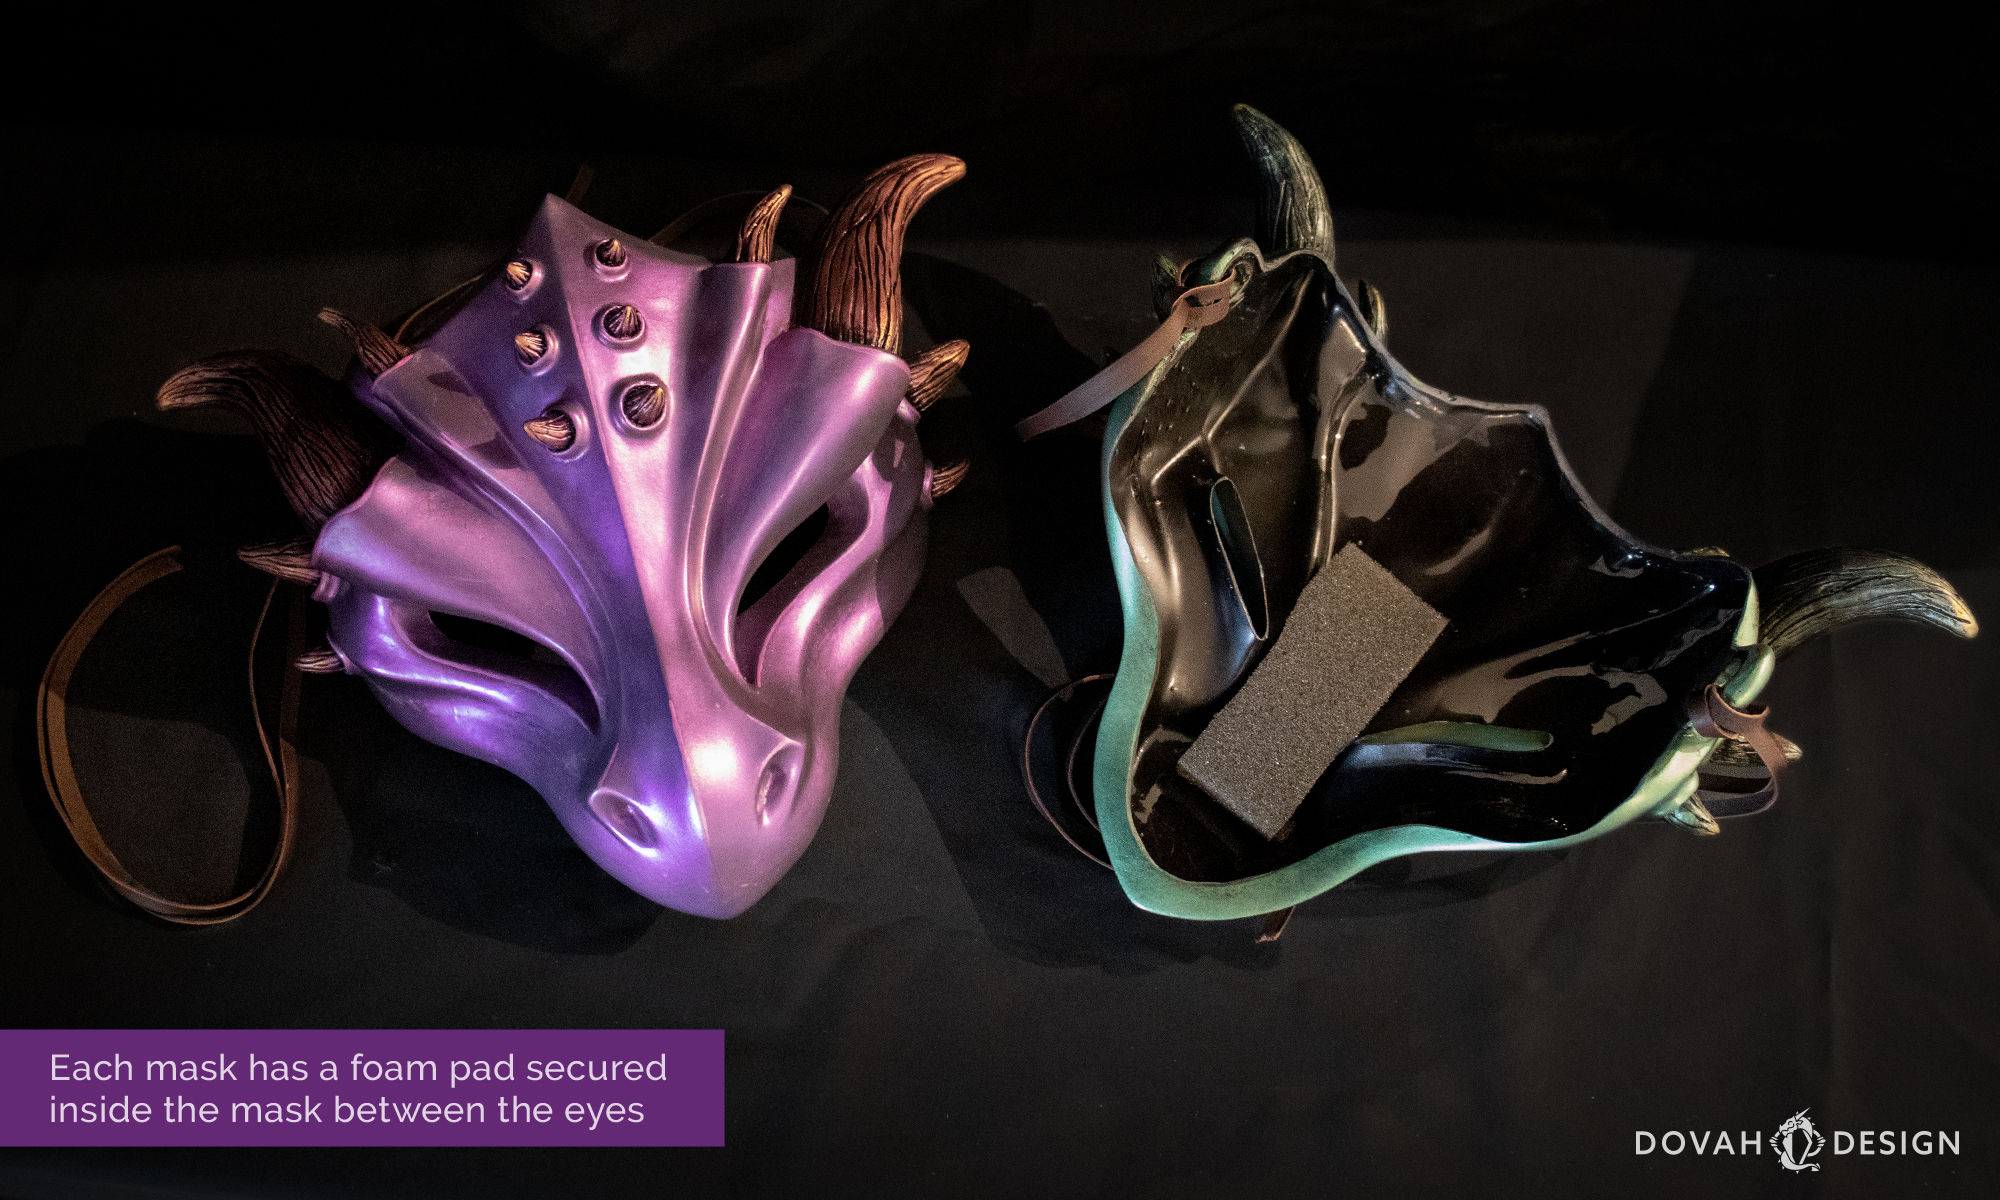 Adult Reflective Light-Up Masquerade Mask